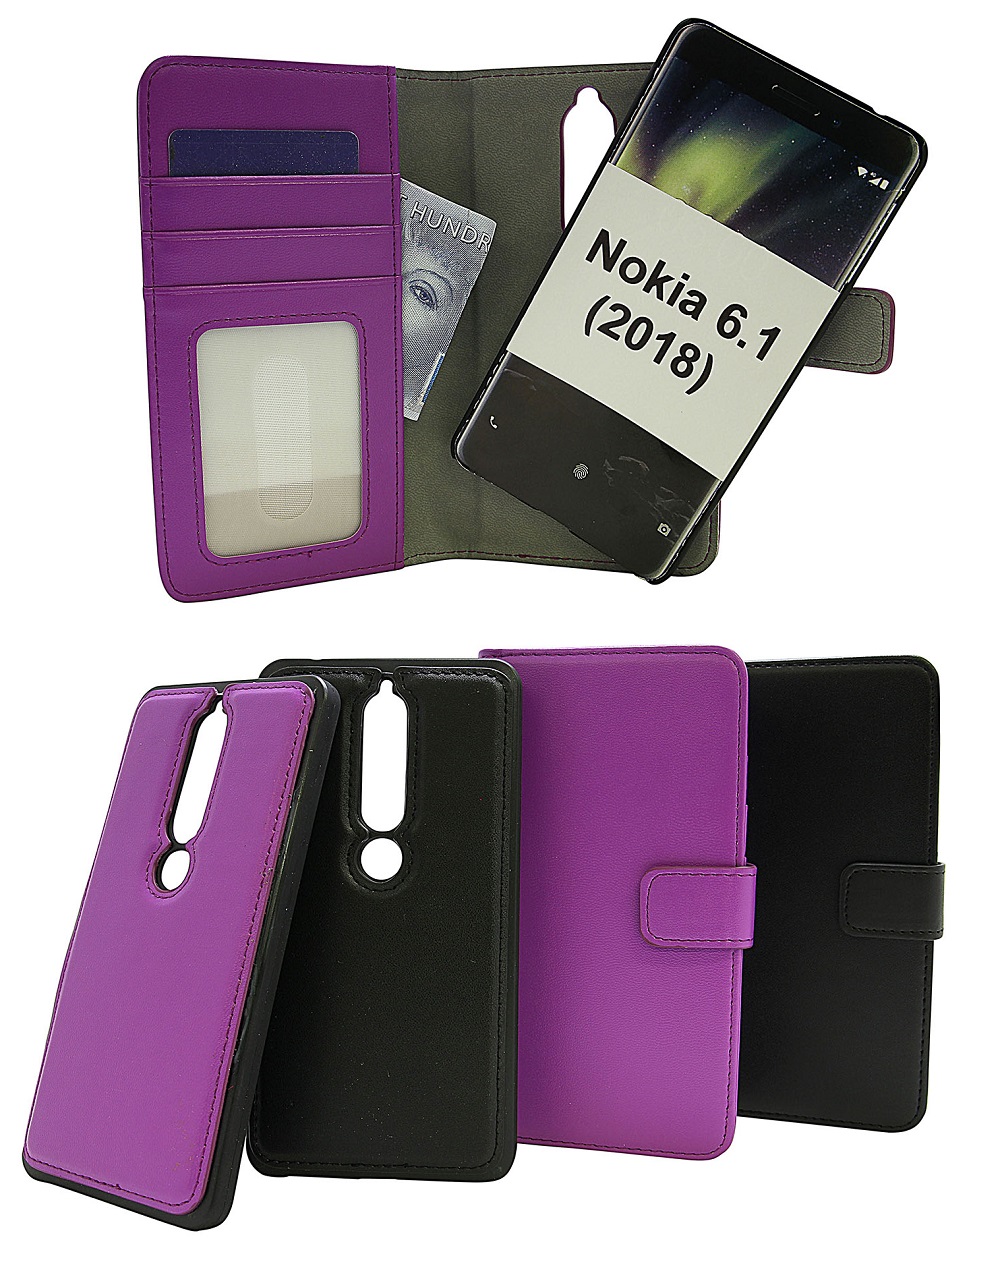 Skimblocker Magnet Wallet Nokia 6 (2018)